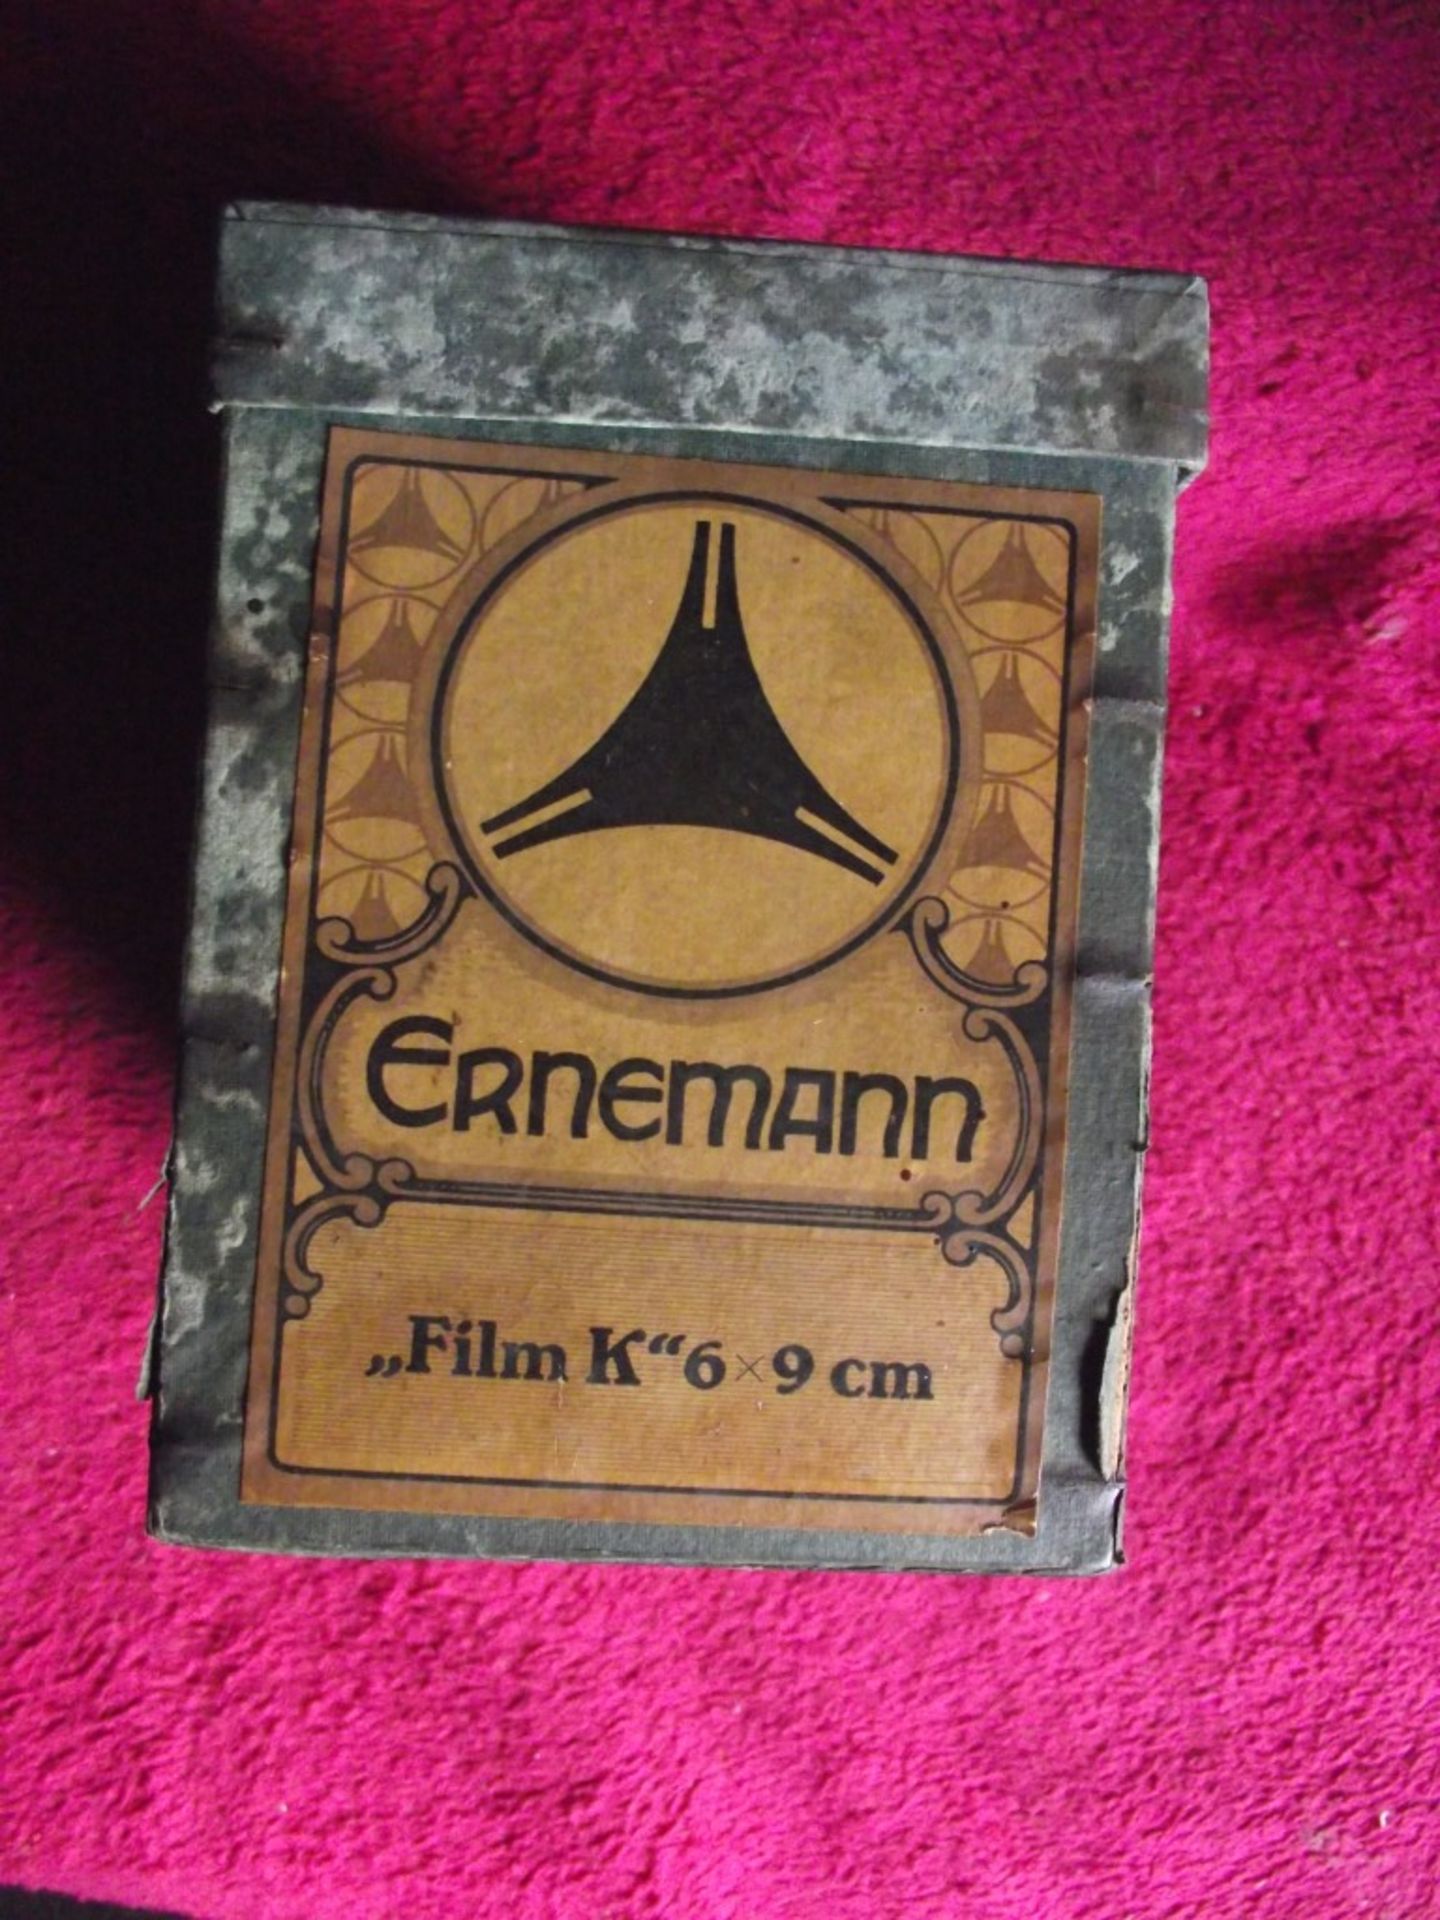 Ernemann "Film K" 6x9 box camera with original shop box - Circa 1920 - 1926 - Image 19 of 20